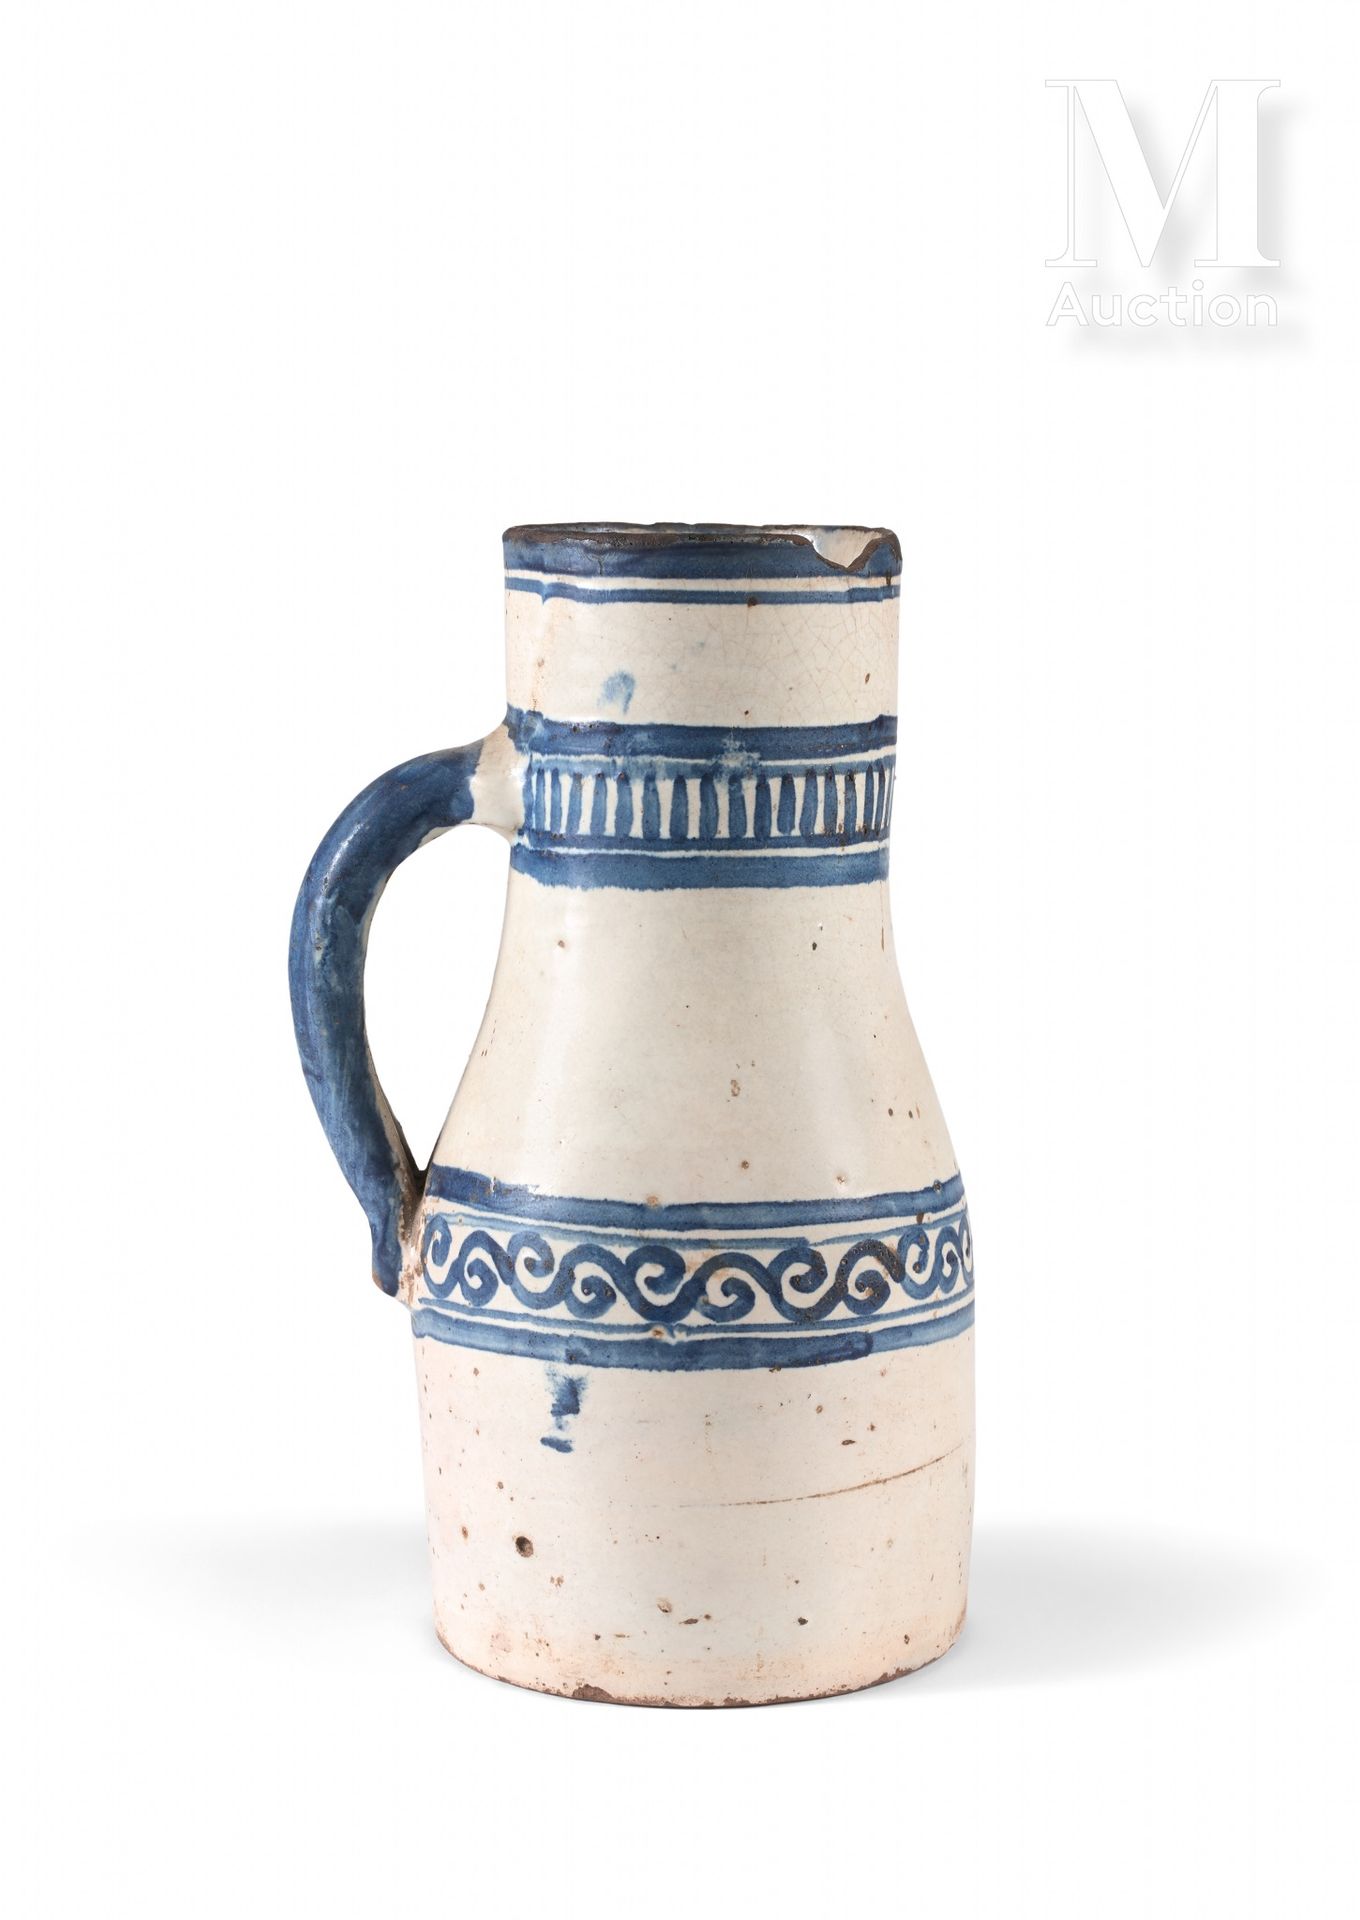 Berrada - Jarre à eau Morocco, Fez, 18th century

Ceramic jug with cobalt-painte&hellip;